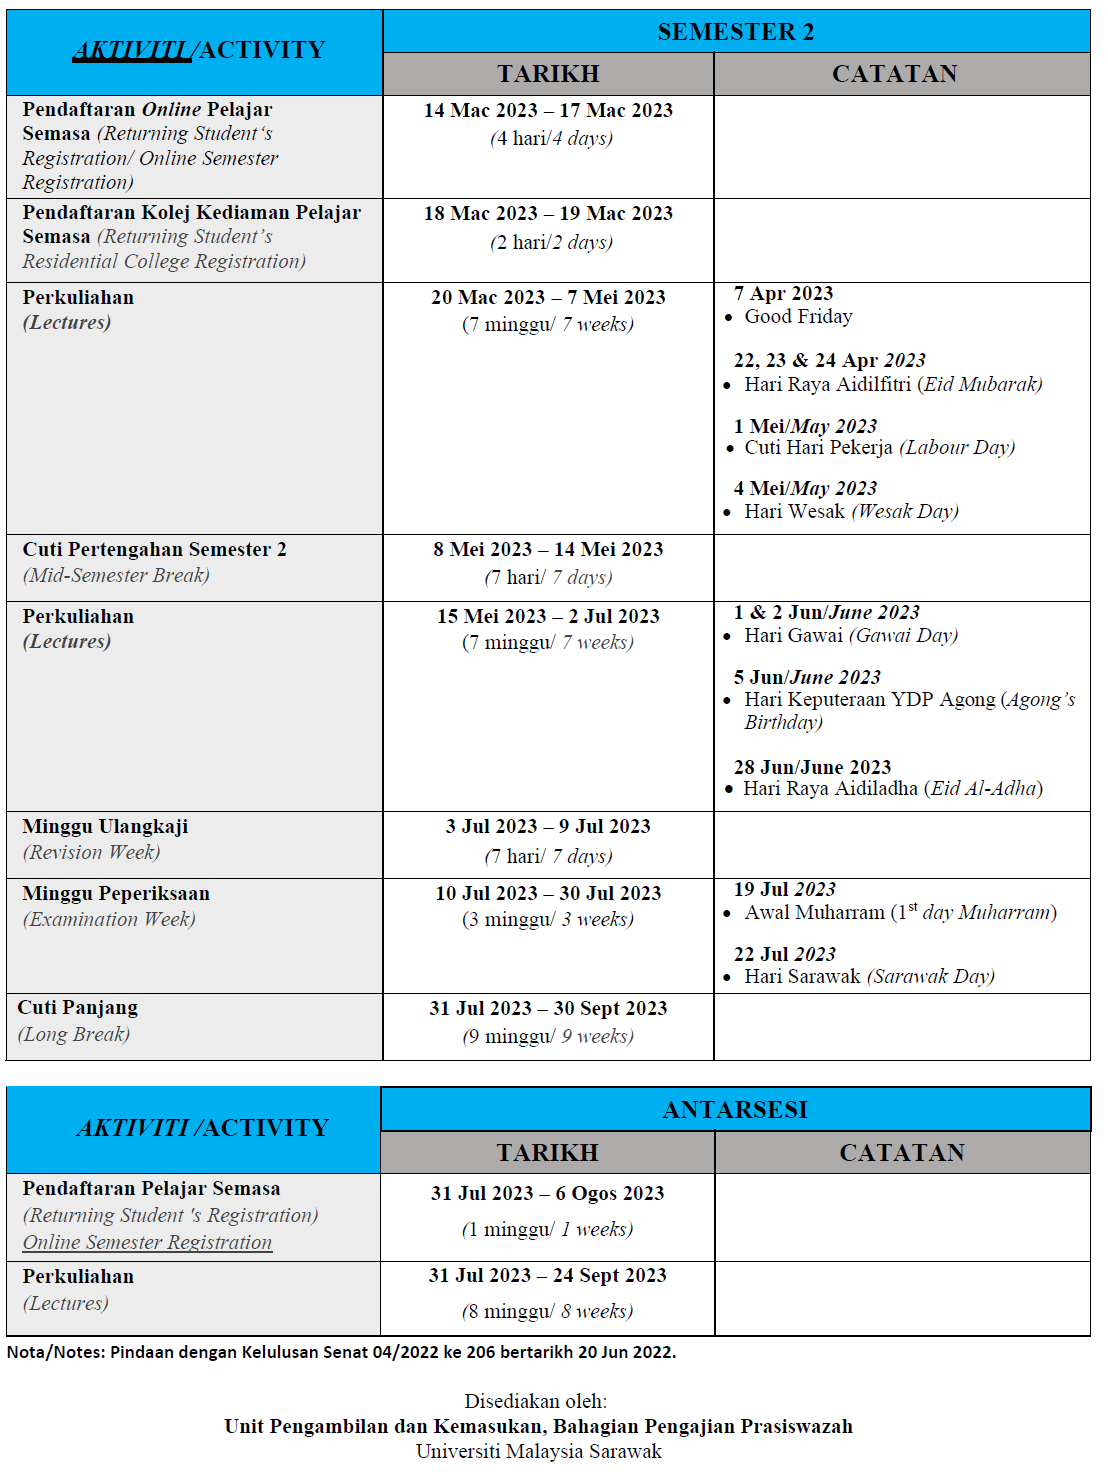 Kalendar Akademik Ijazah Sarjana Muda Sesi 2022/2023 / Academic